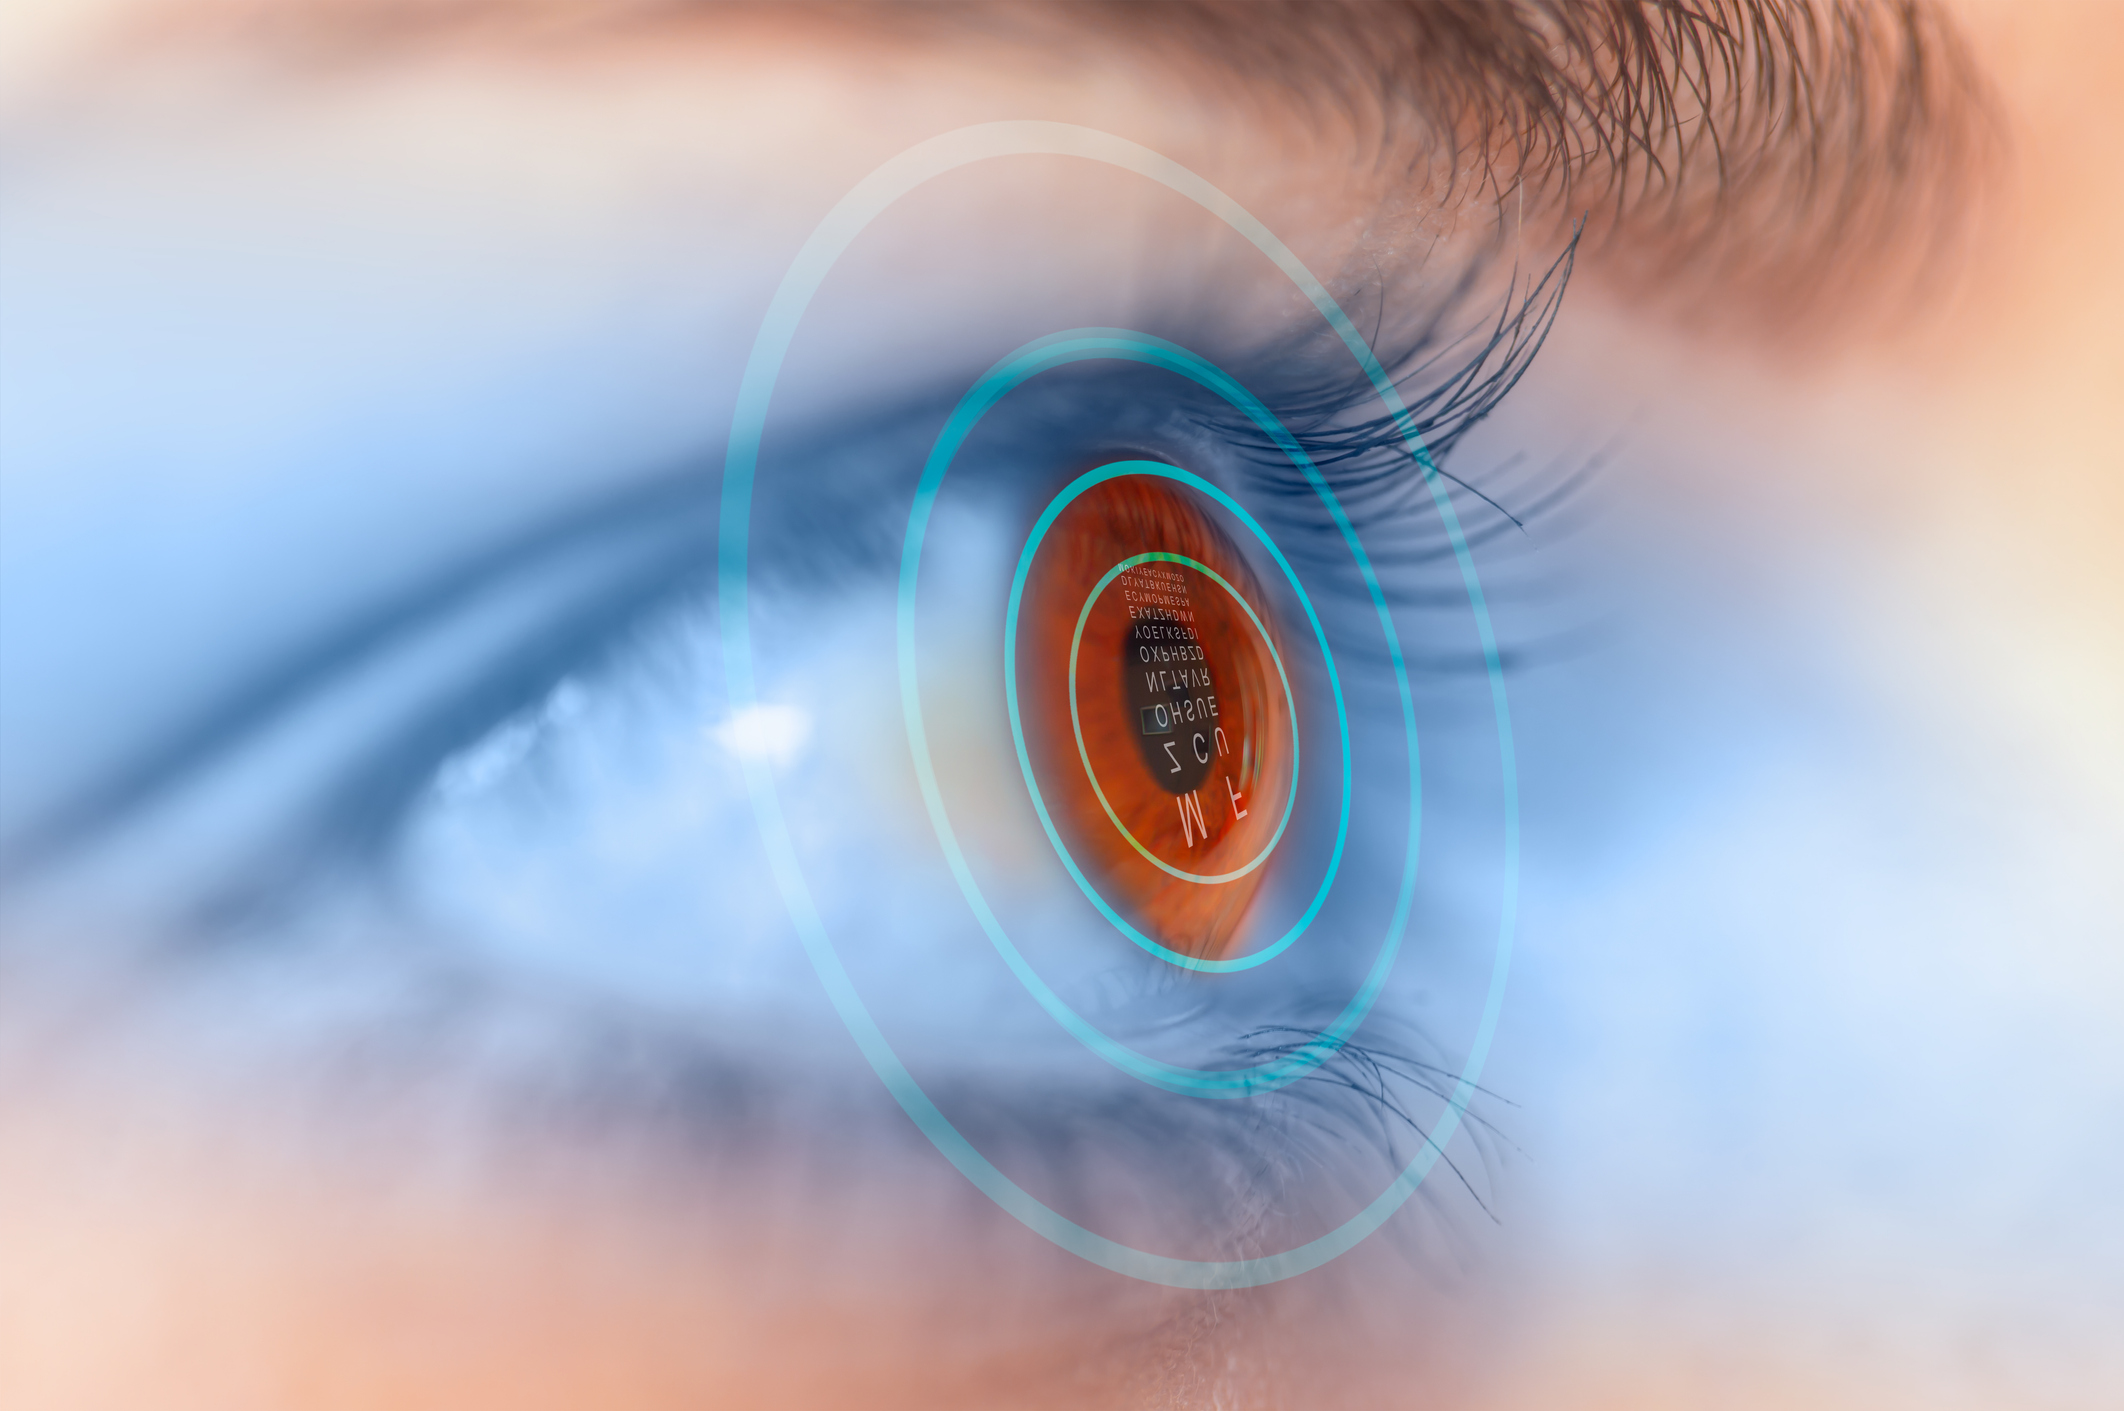 Glaucoma: Guarding Vision through Awareness and Care